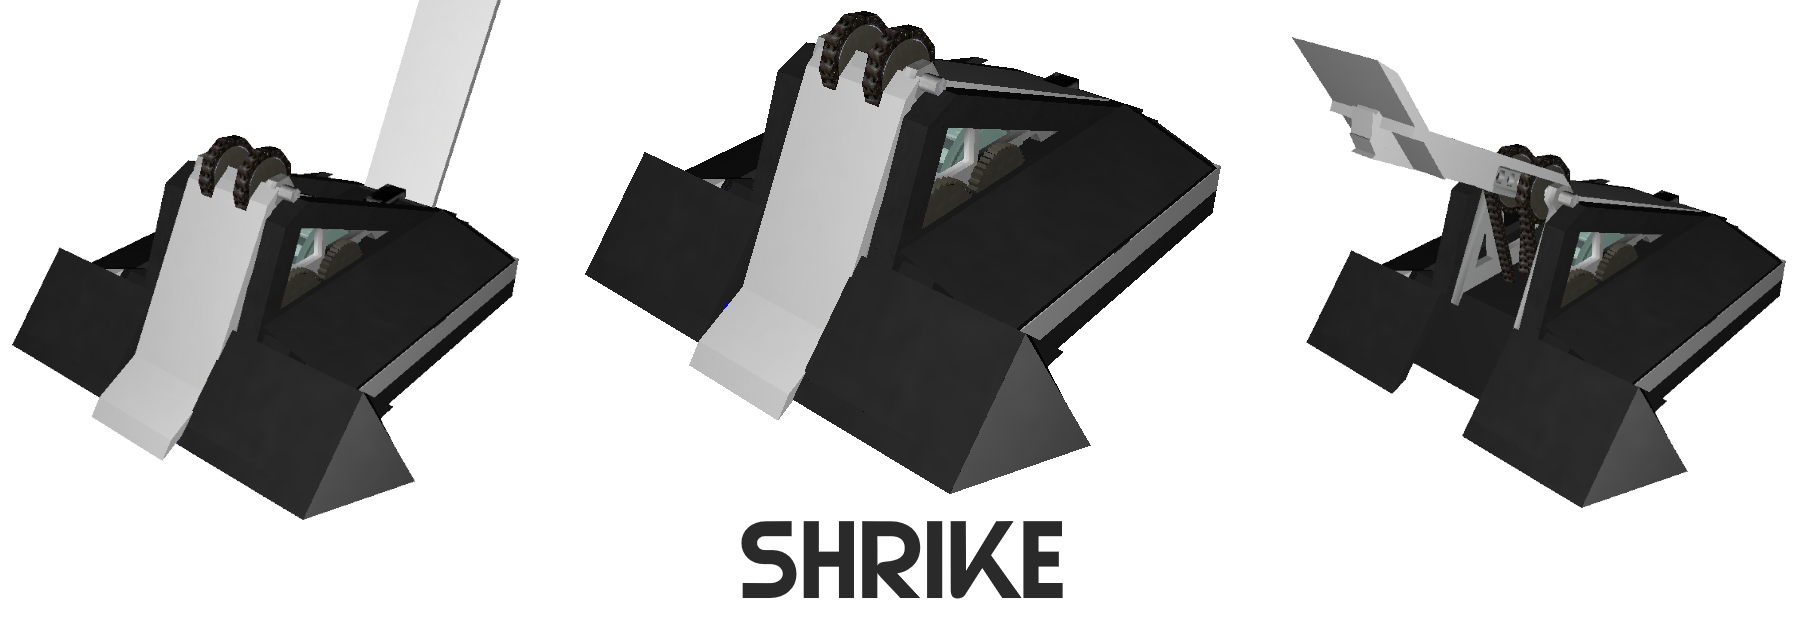 Shrike Ext.png